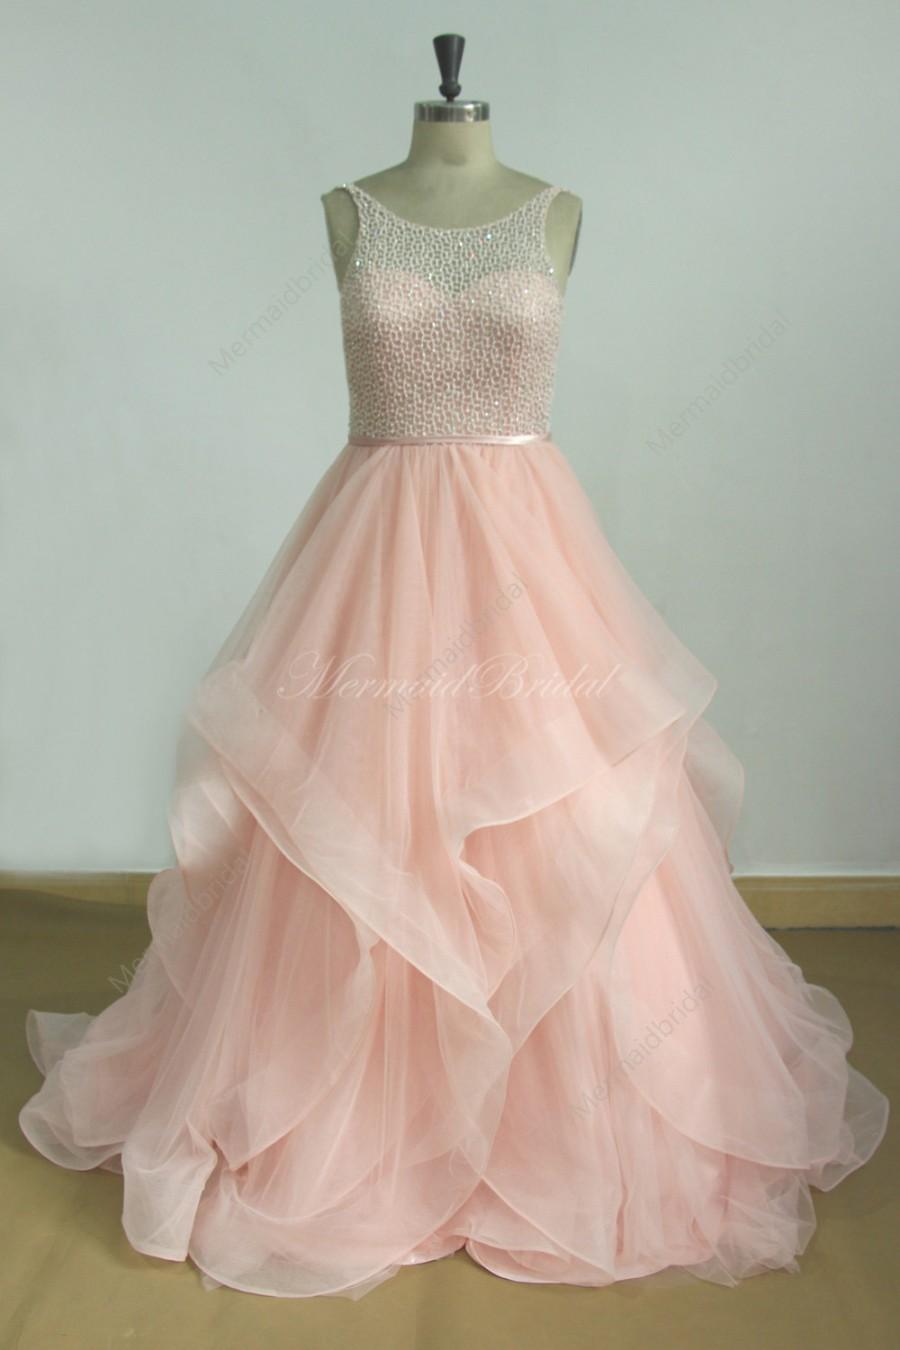 زفاف - Romantic Blush pink A line tulle wedding dress with Swarovski beads